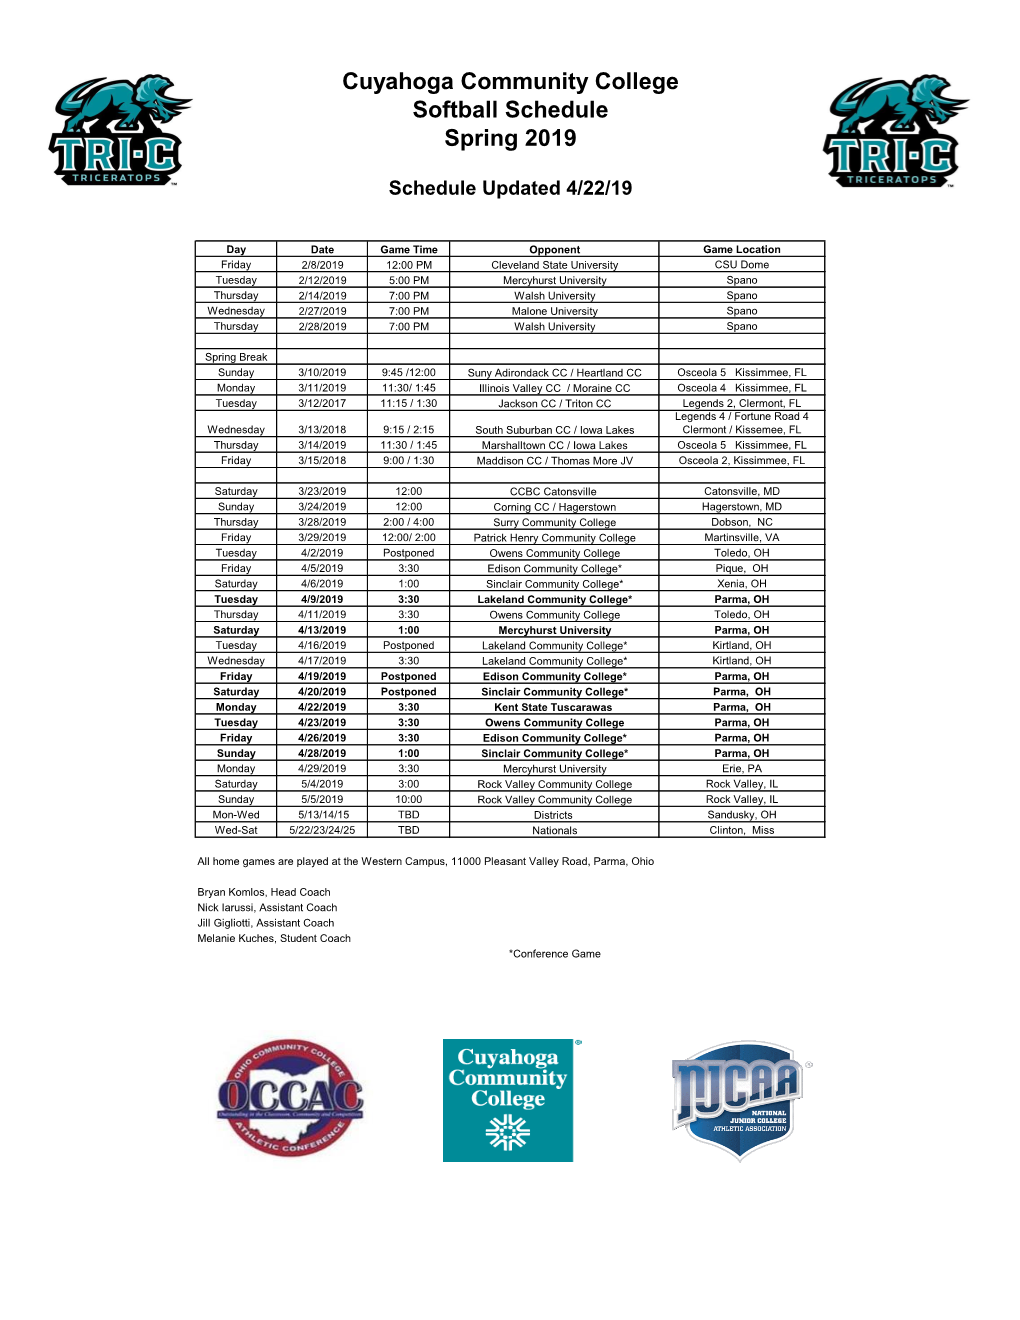 Cuyahoga Community College Softball Schedule Spring 2019